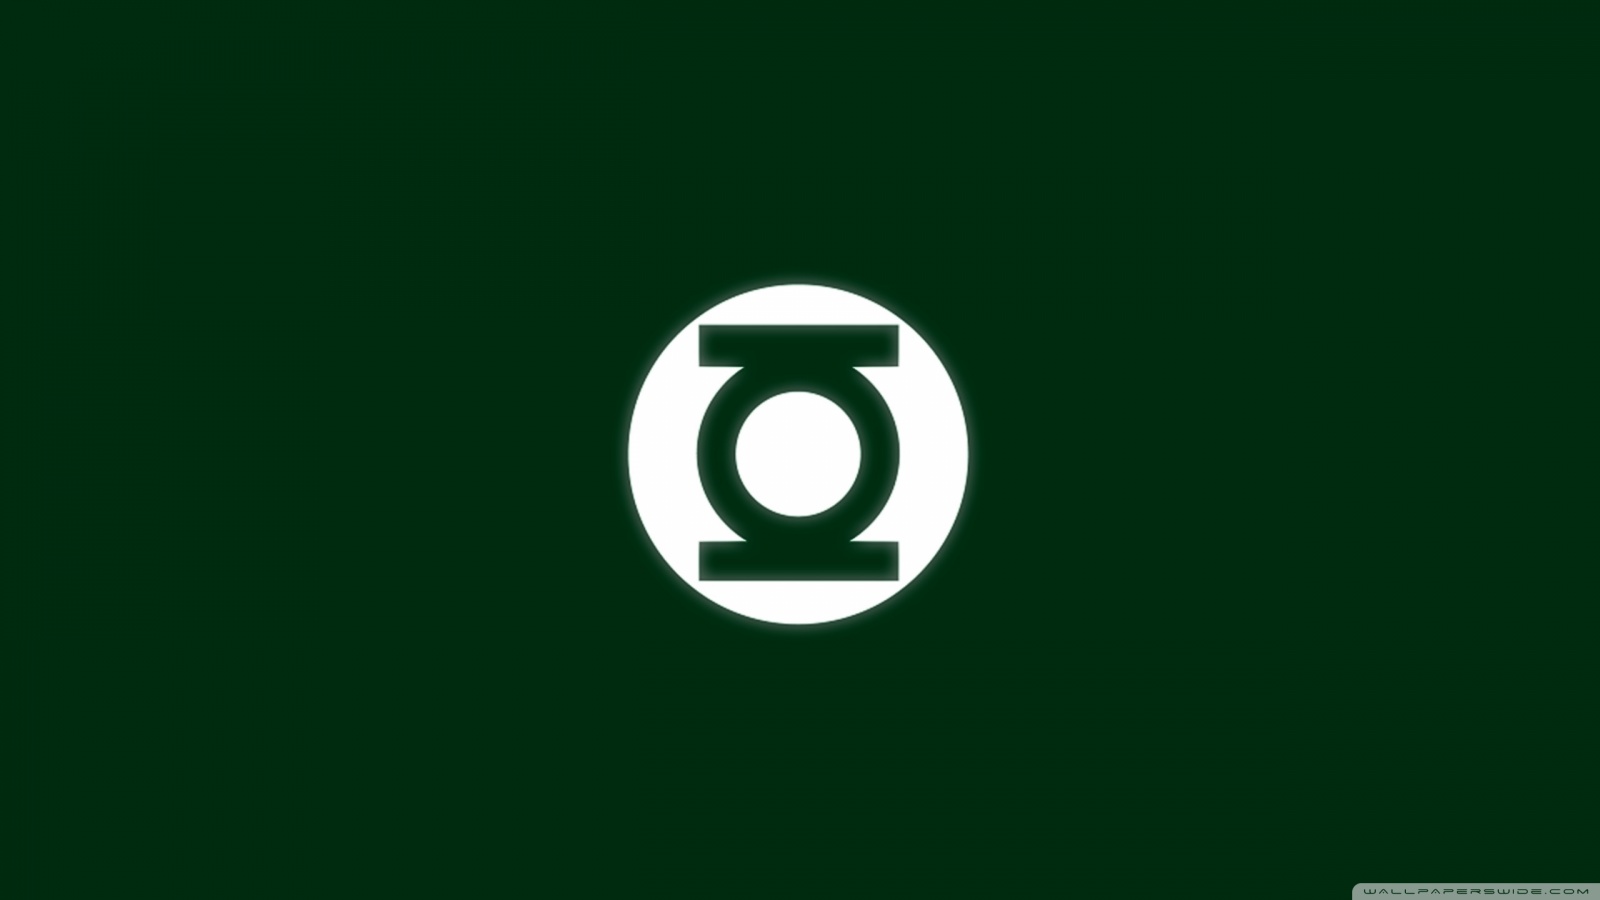 green lantern symbol wallpaper hd